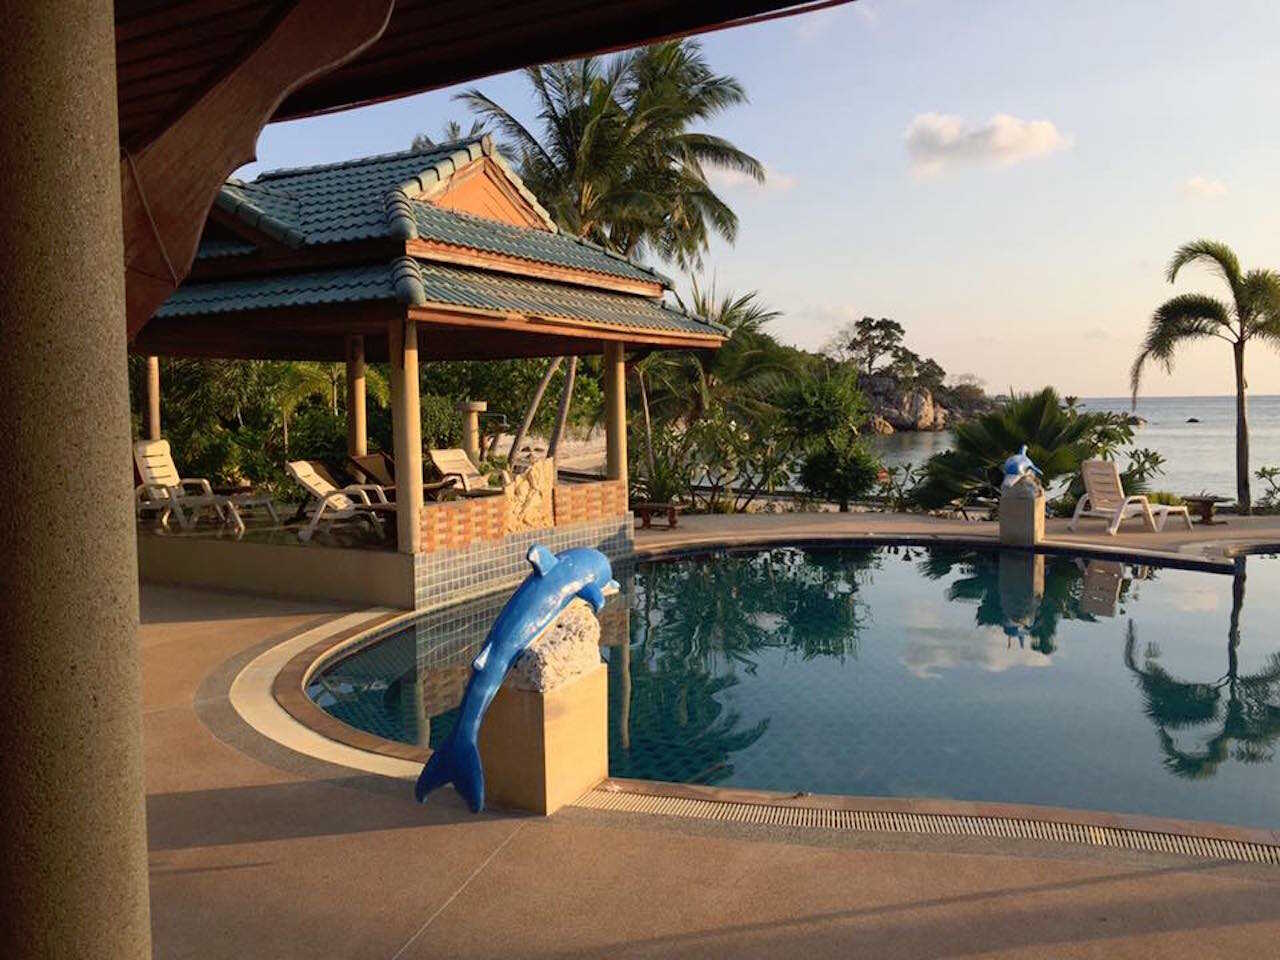 Dolphin Bay Beach Resort - Koh Phangan - vores 4. stop i Thailand